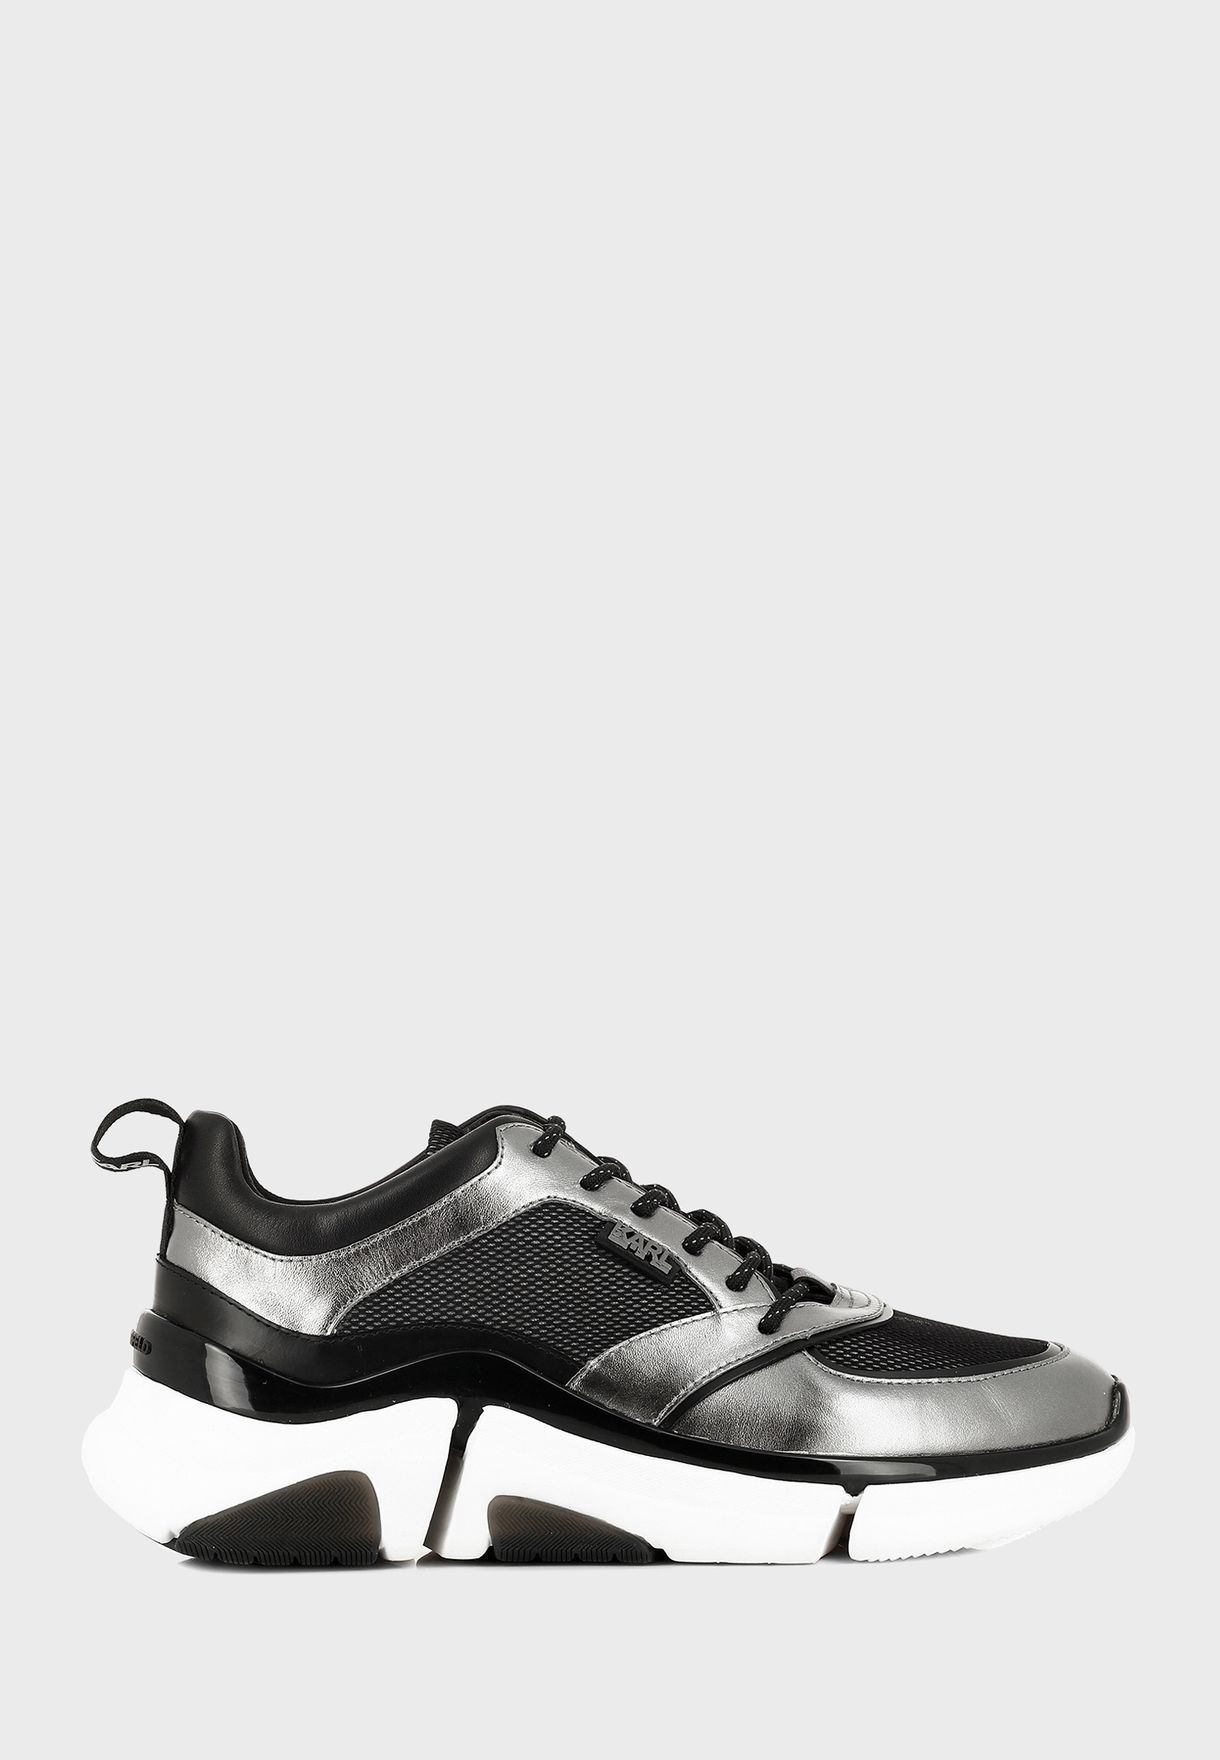 karl lagerfeld sport shoes